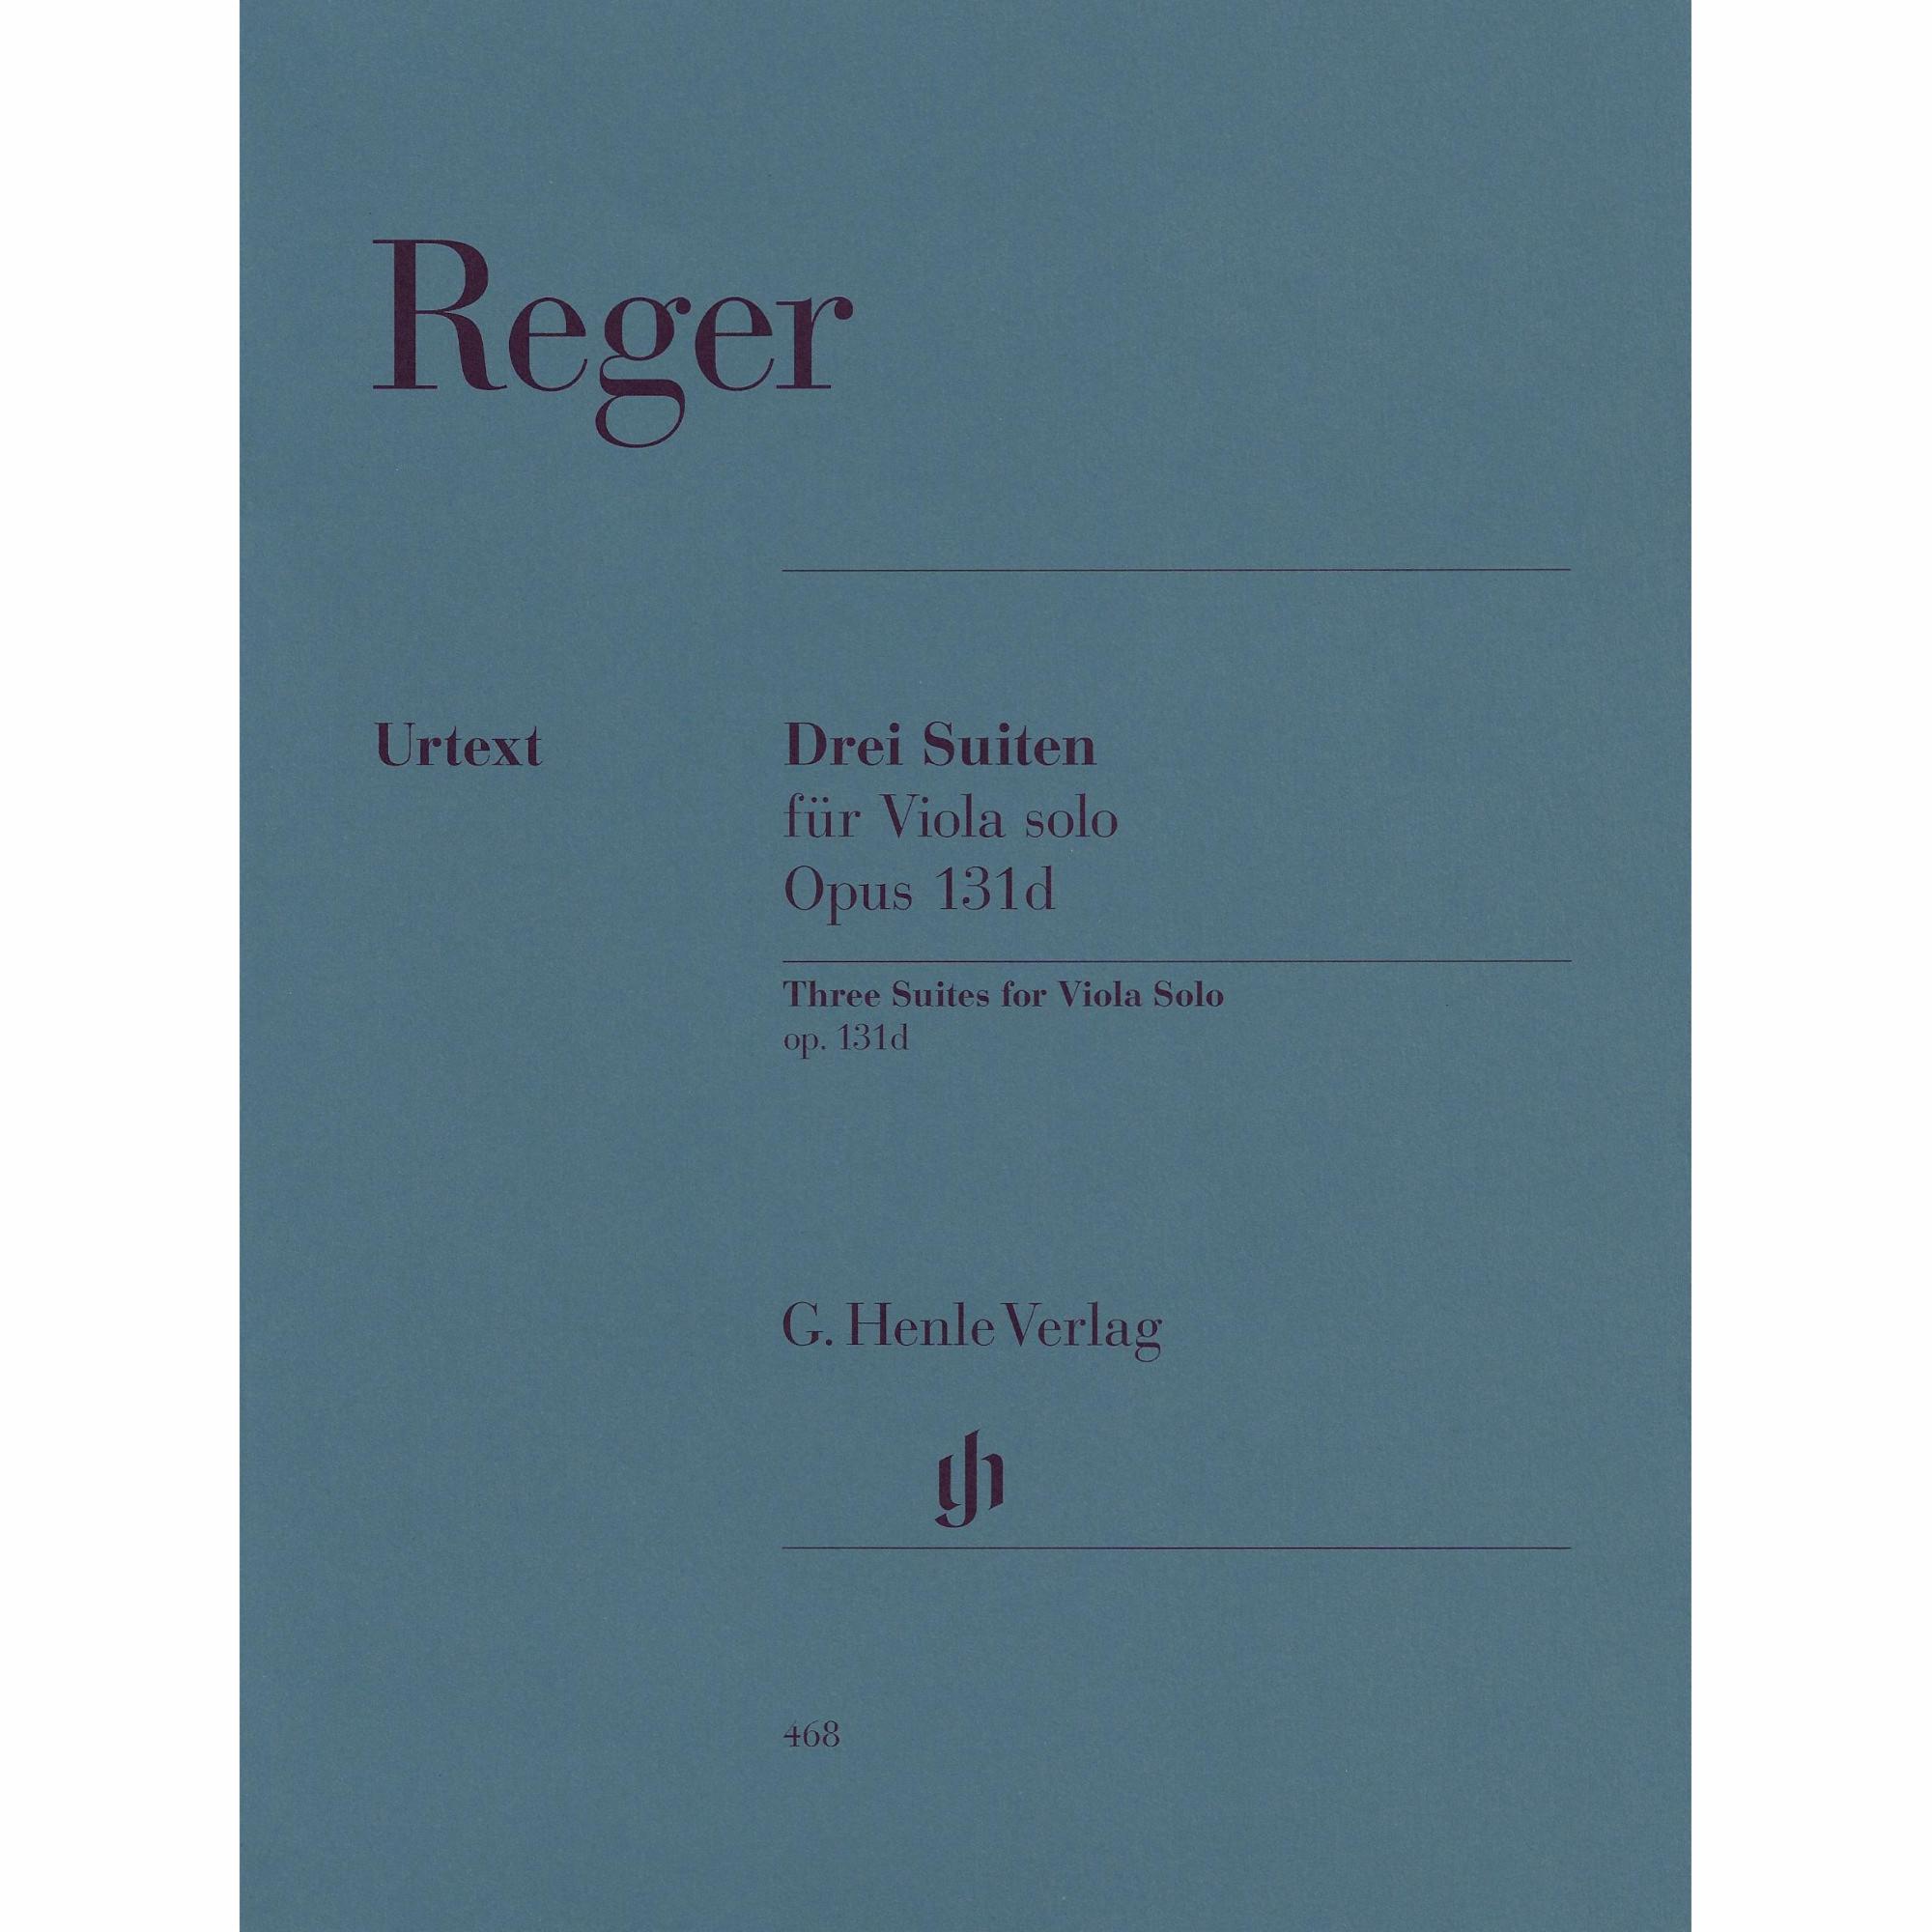 Reger -- Three Suites, Op. 131d for Solo Viola